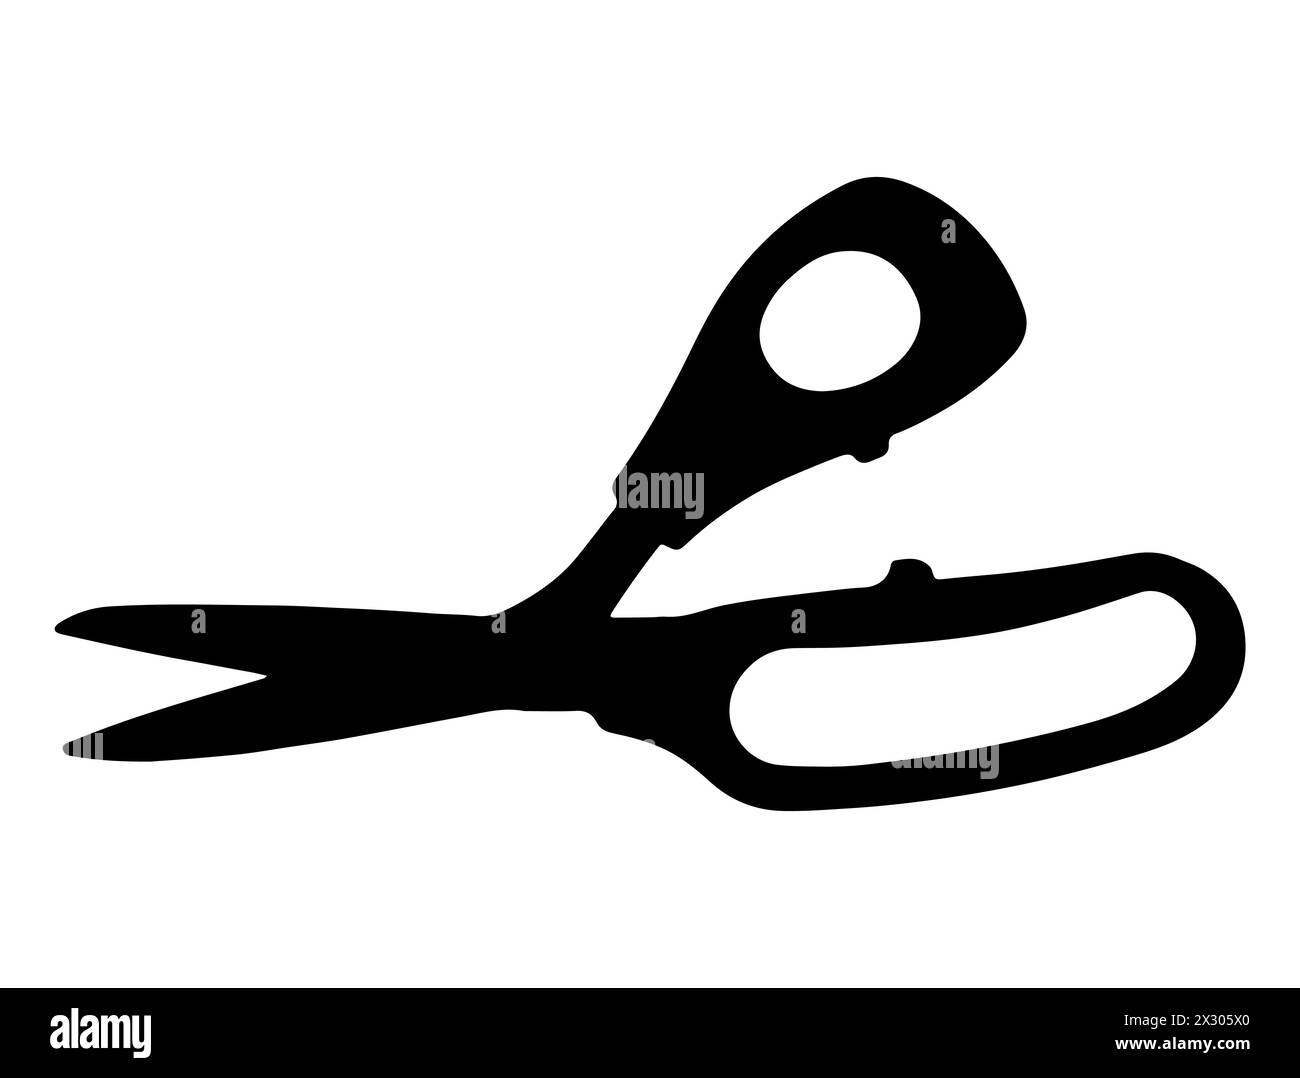 Scissor silhouette vector art Stock Vector